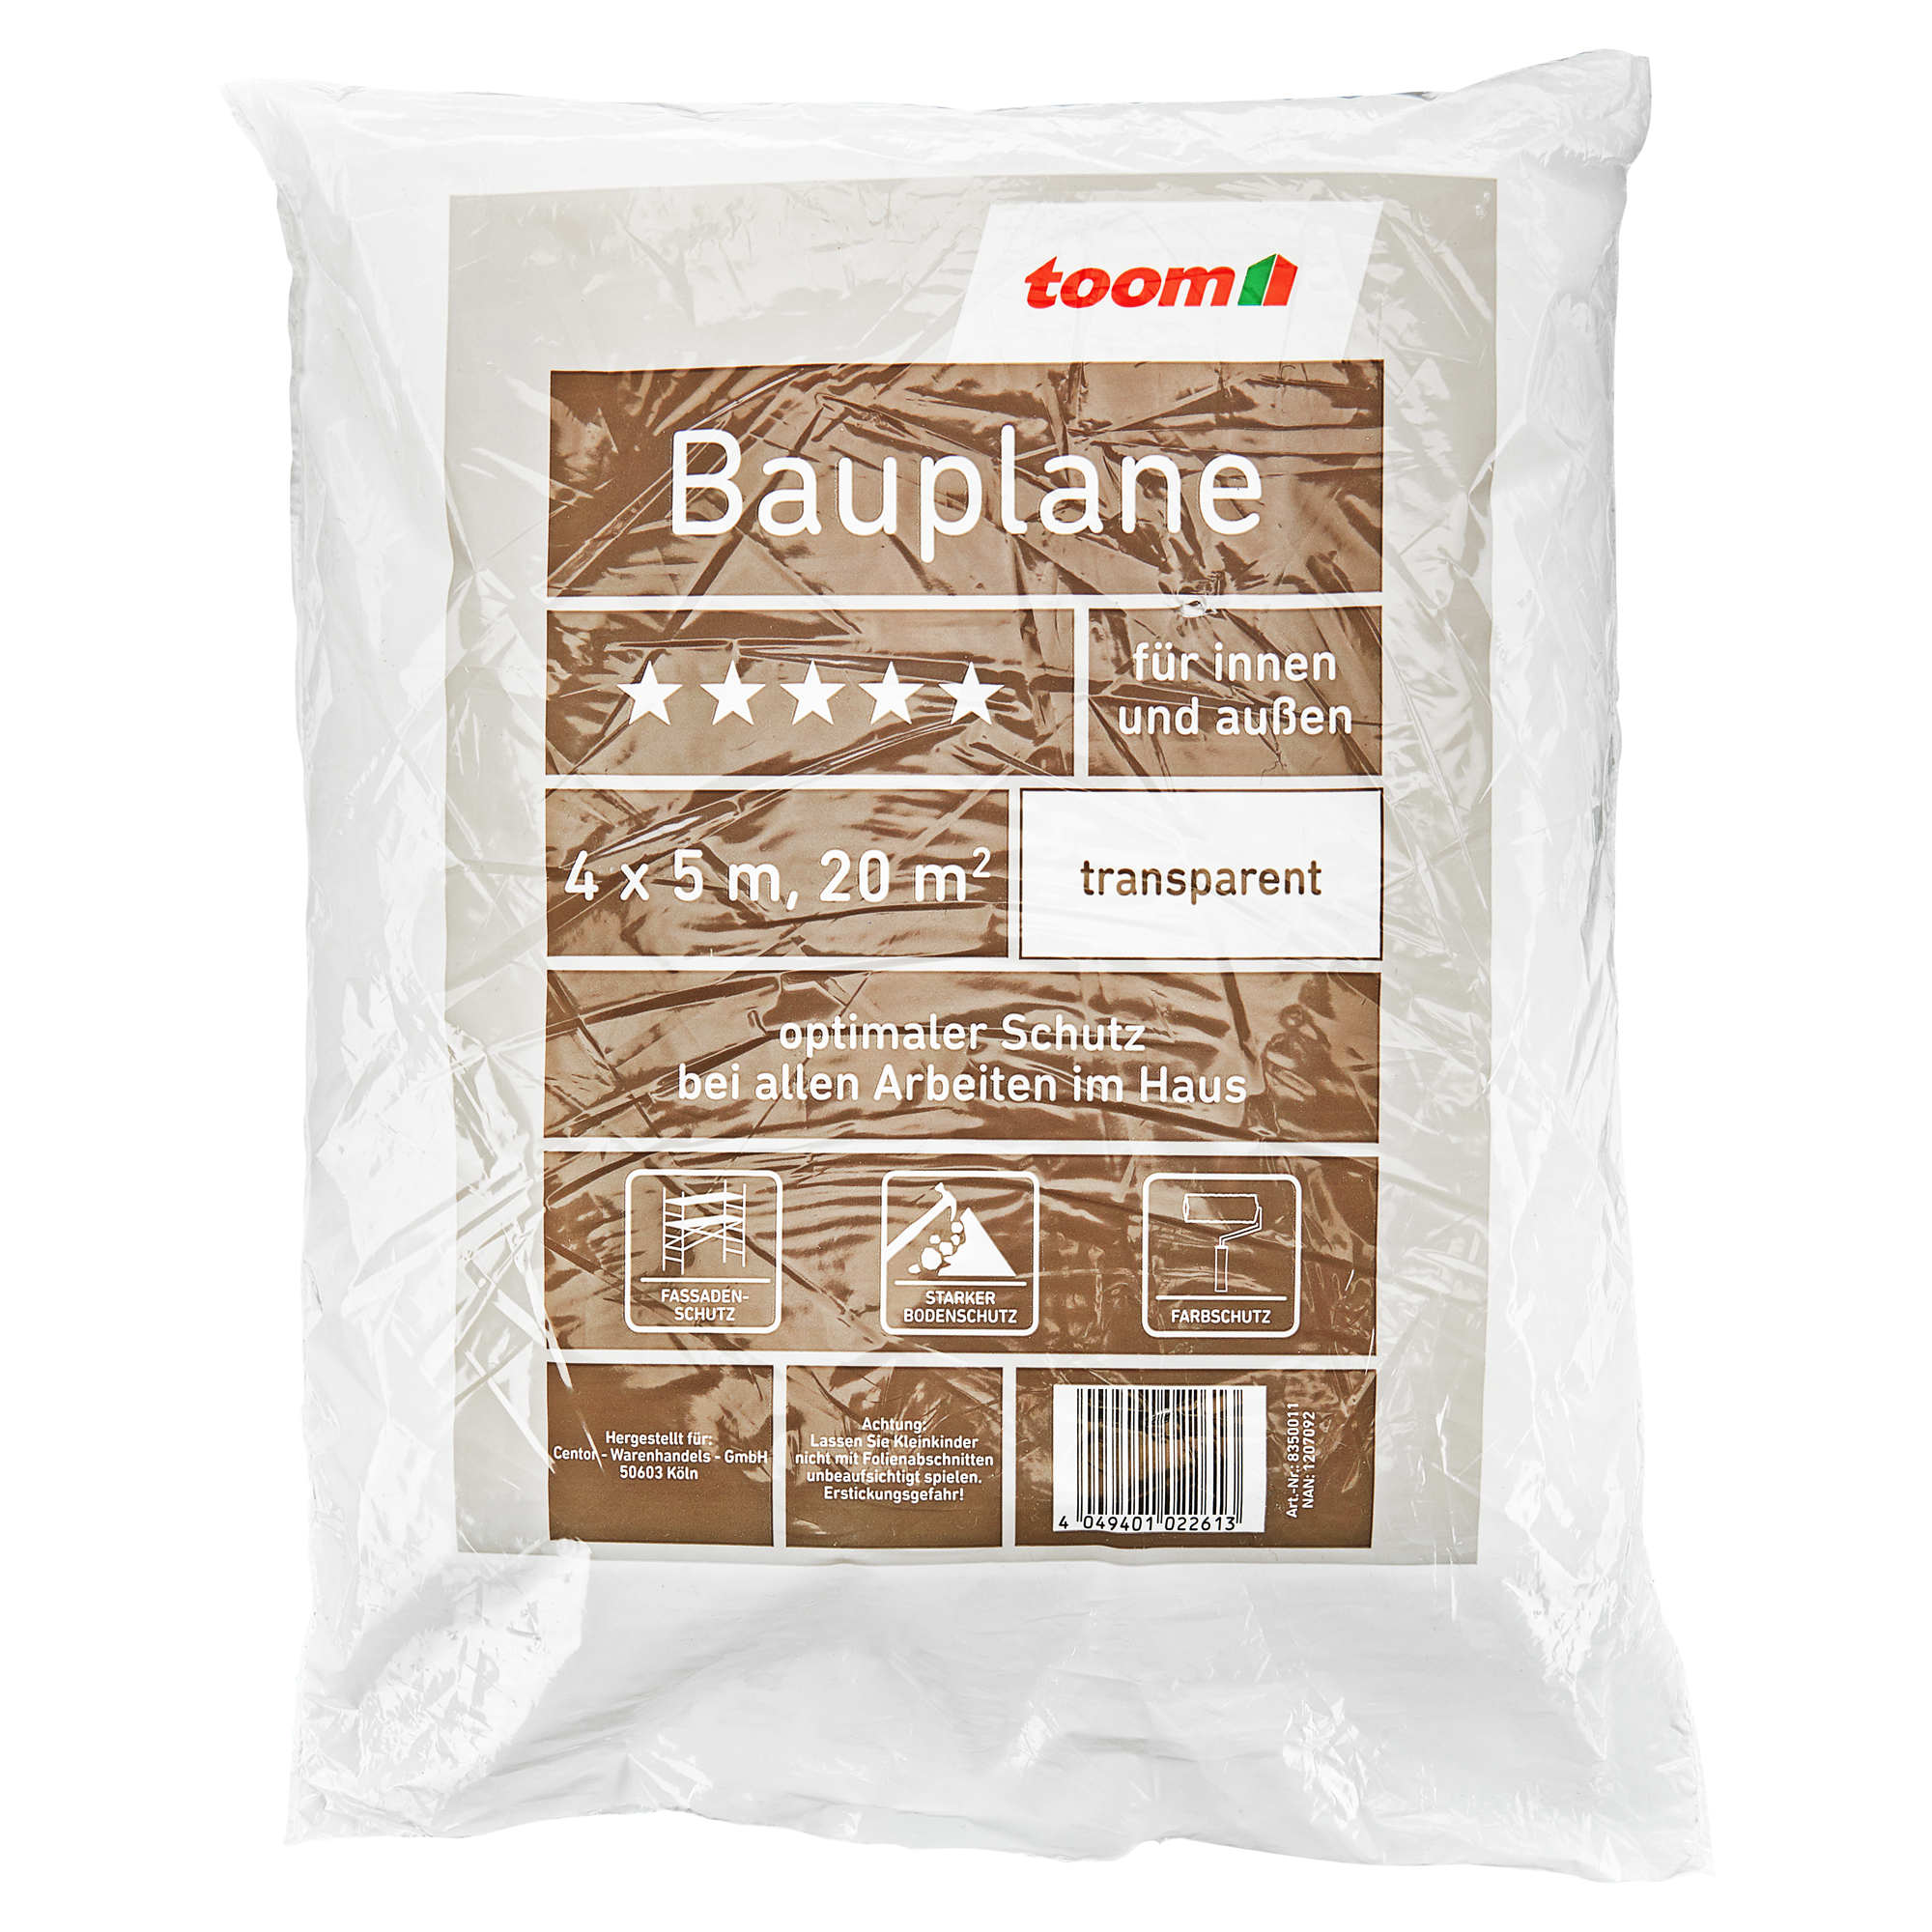 Bauplane "Profi" 500 x 400 cm + product picture